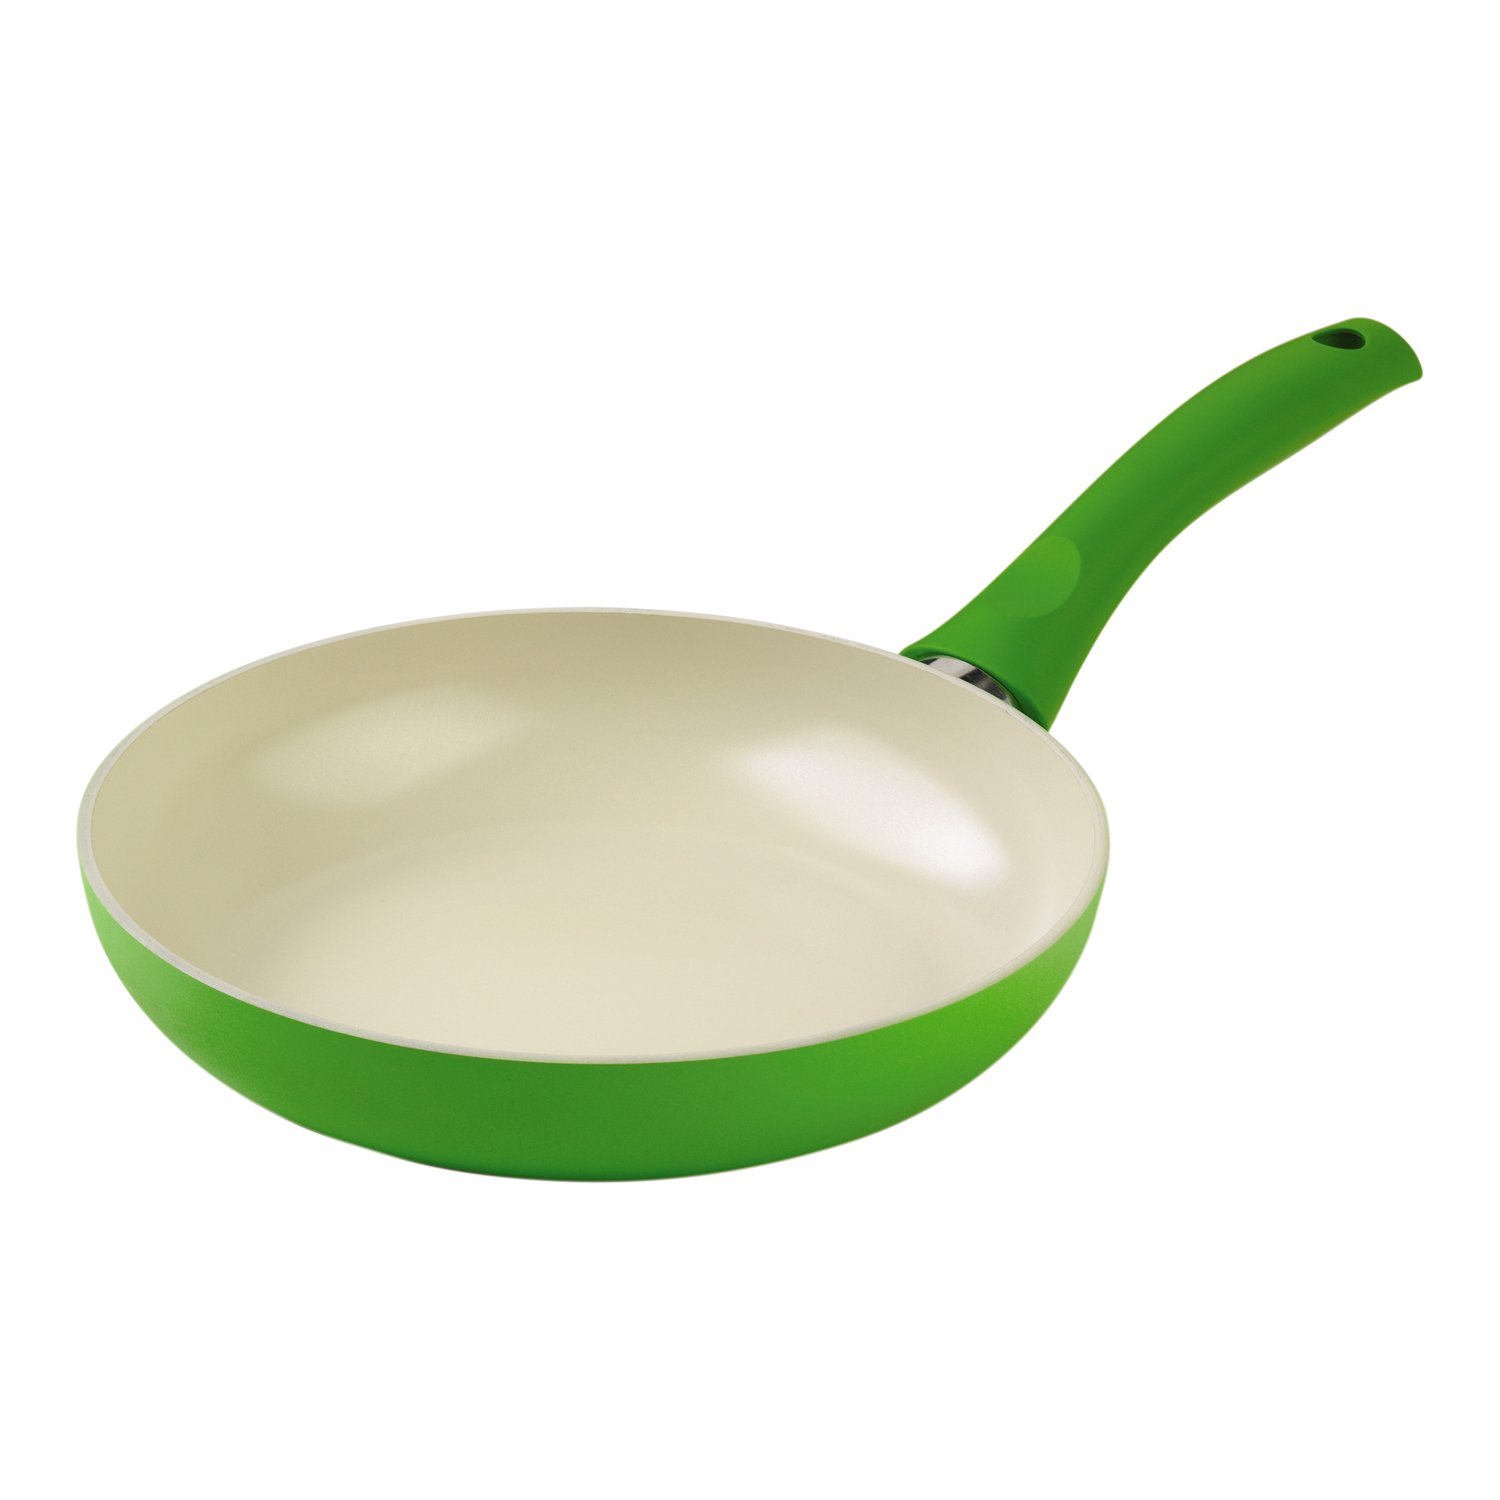 Kuhn Rikon Colori Cucina 24 Cm Ceramic Induction Frying Pan, Green